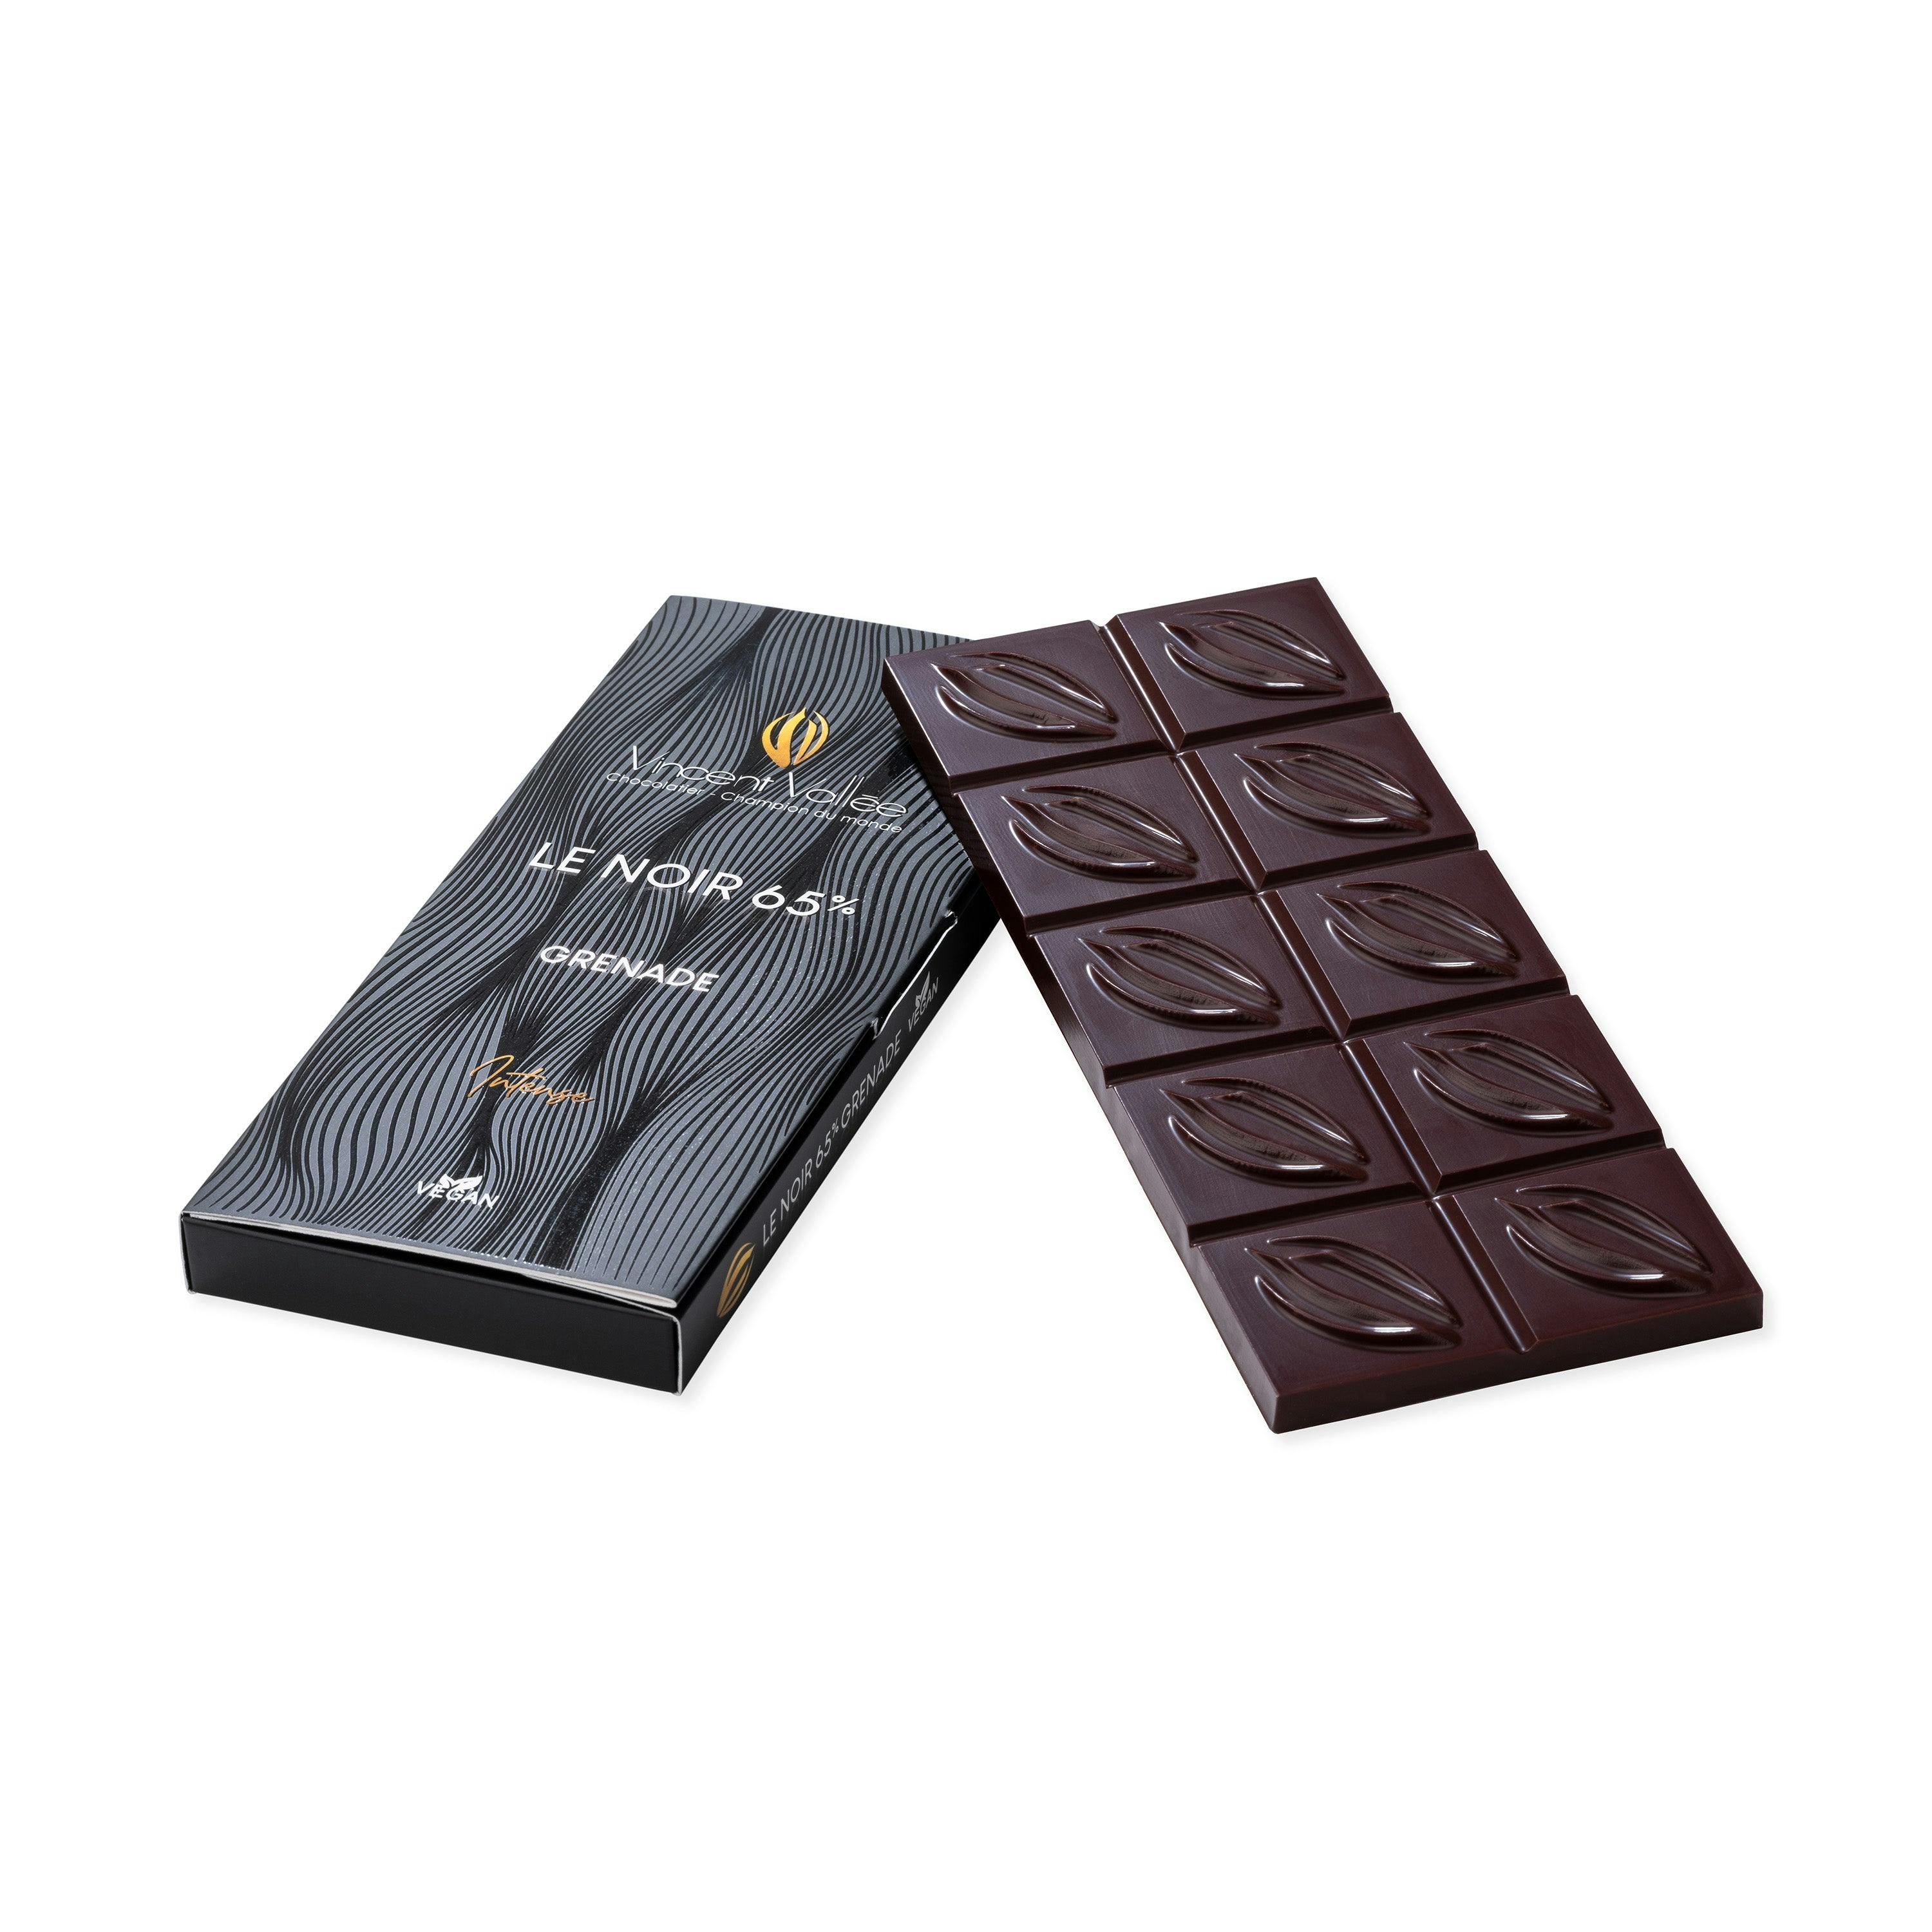 Grenade 65% Vegan - Vincent Vallée world champion chocolatier